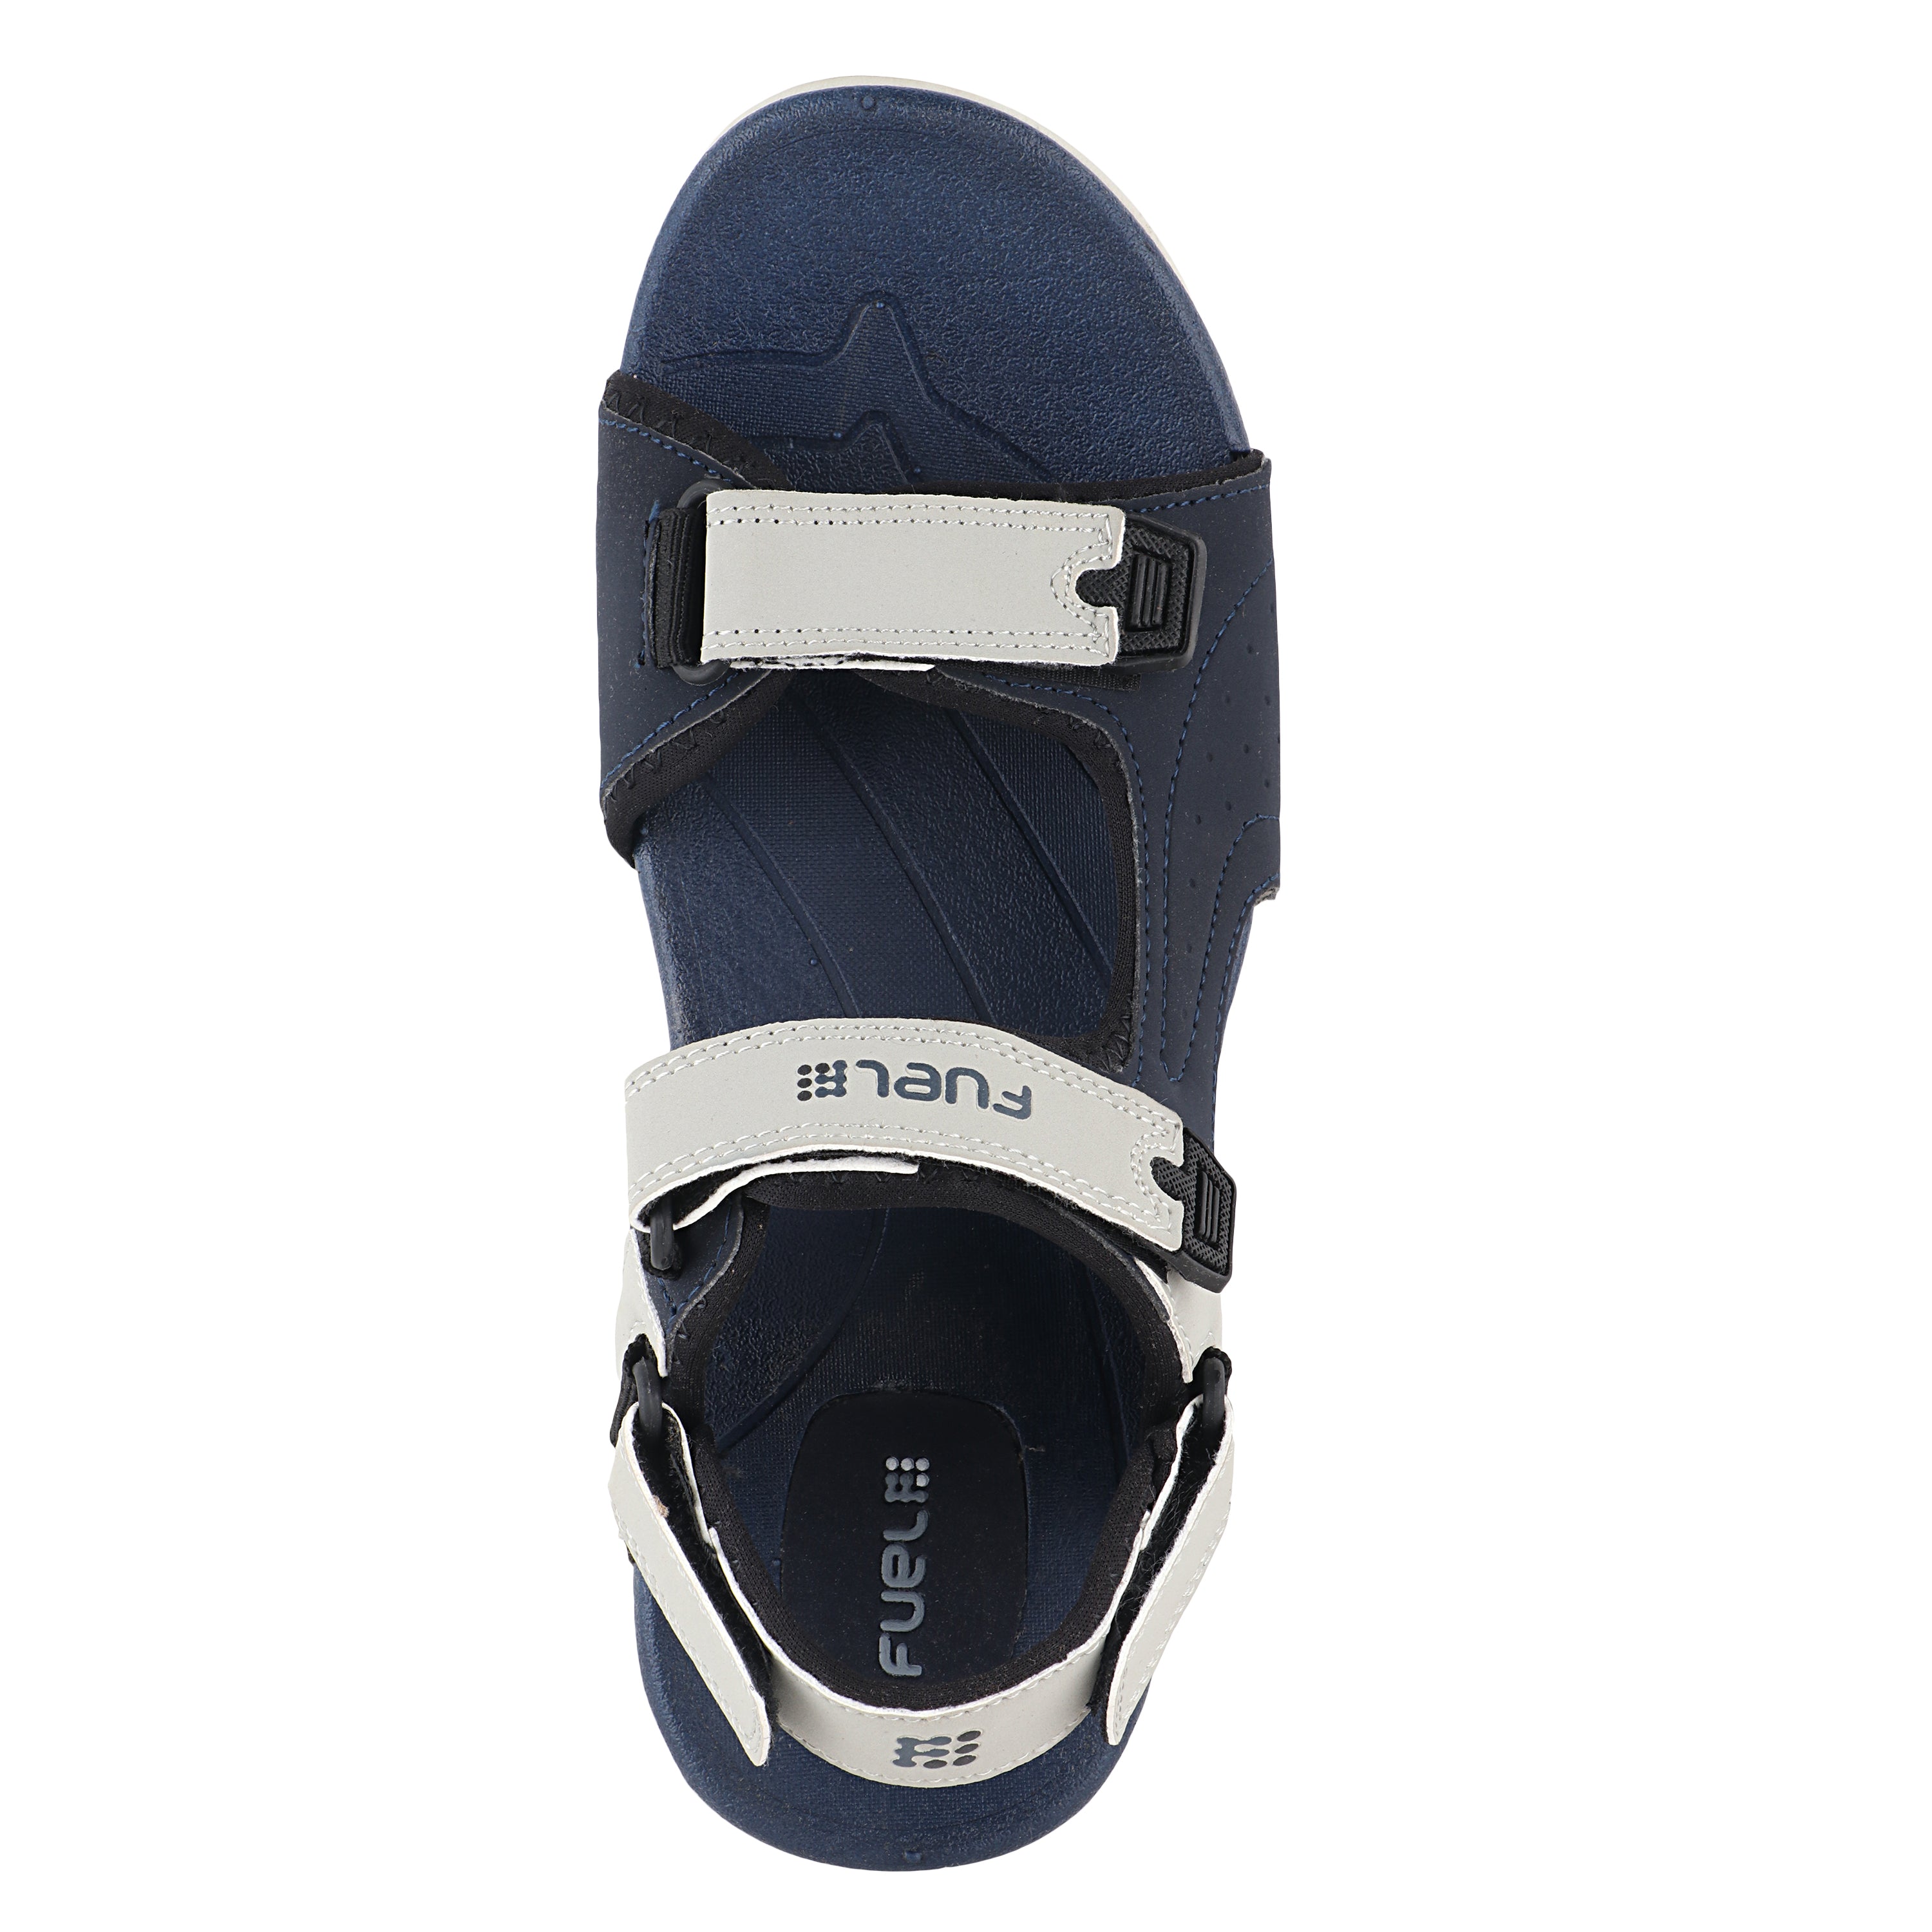 Fuel 2112-02 Sandals For Men's (Navy-Blue)